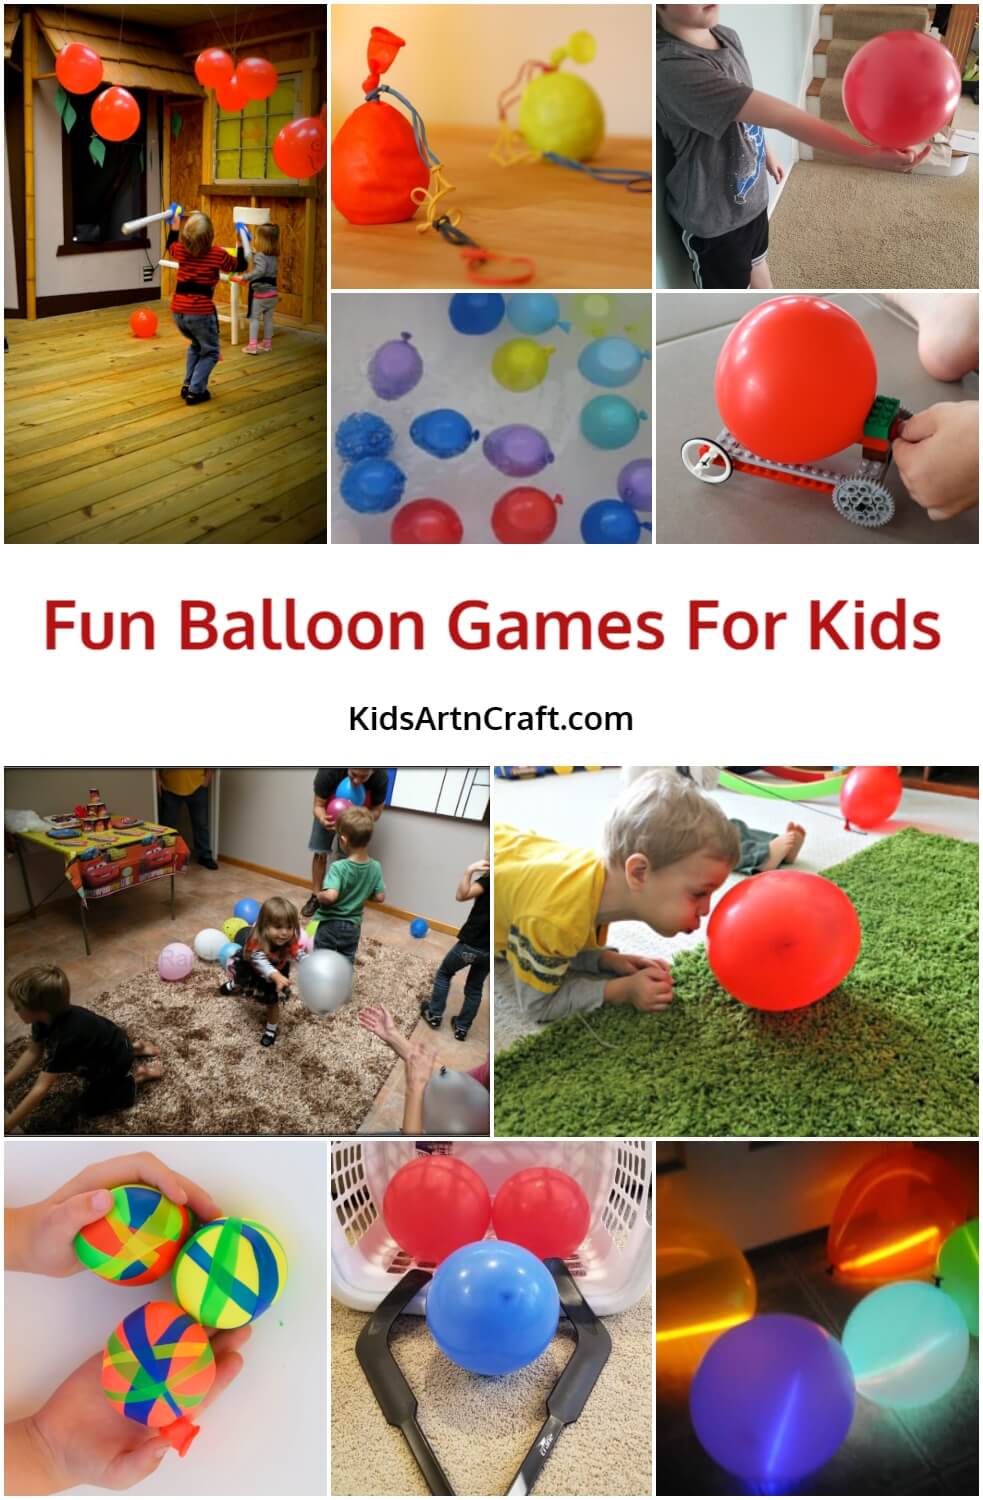 Fun Balloon Games For Kids : DIY Fun & Joyful Game Ideas For Kids